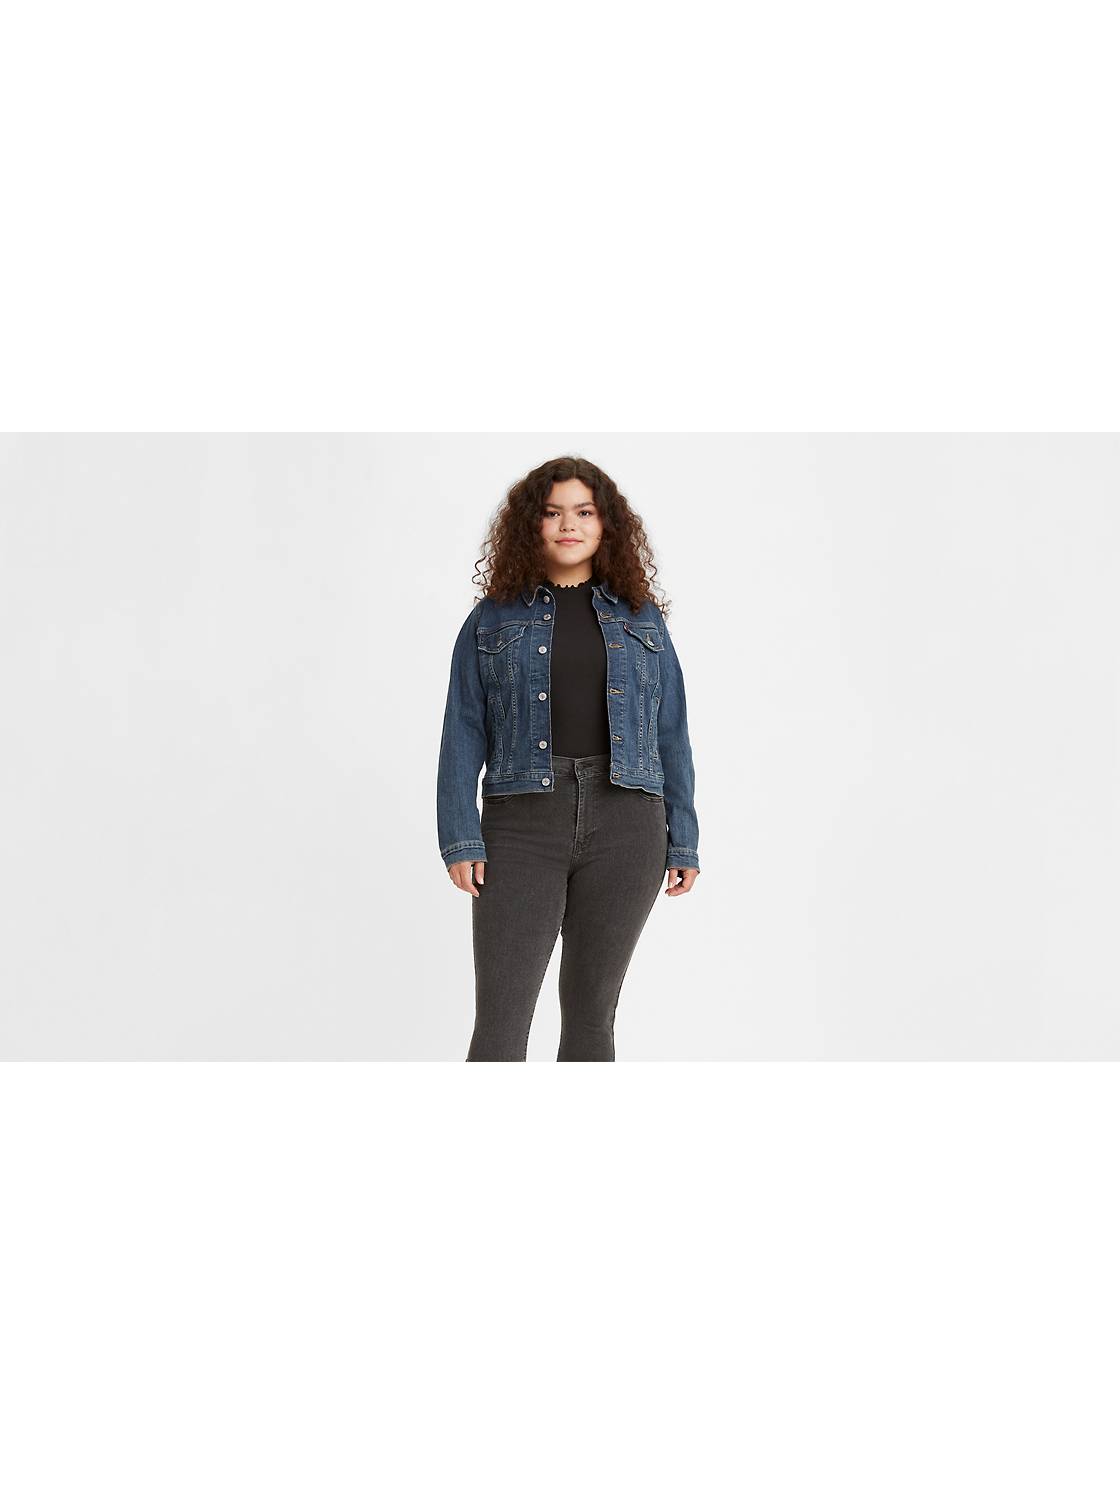 Women's Jackets: Denim, Shirt Jacket, Corduroy, + Leather